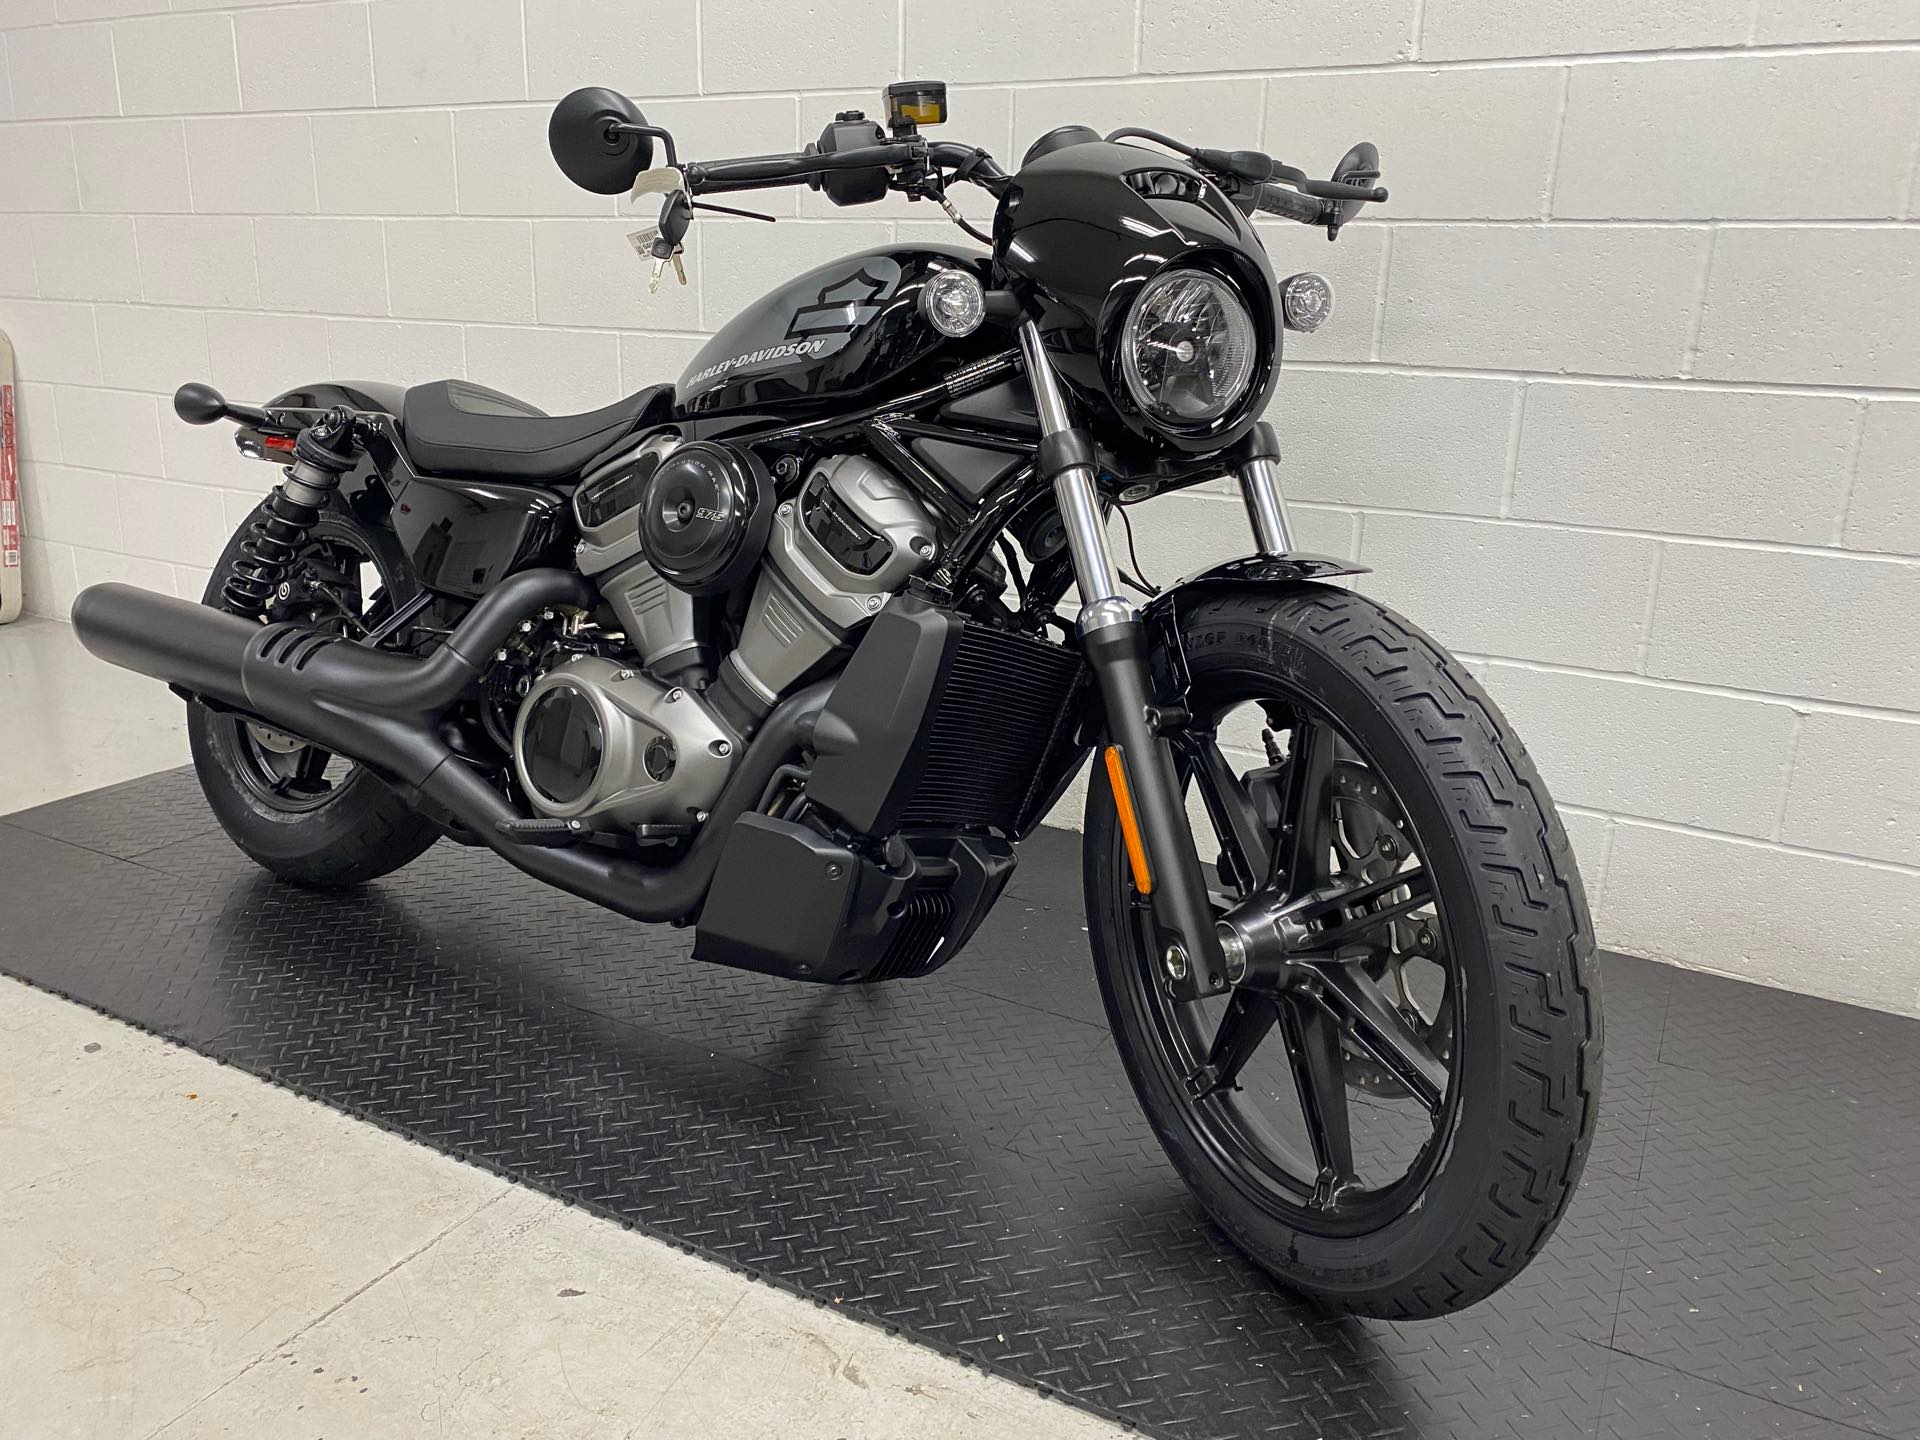 2022 Harley-Davidson Sportster Nightster at Destination Harley-Davidson®, Silverdale, WA 98383